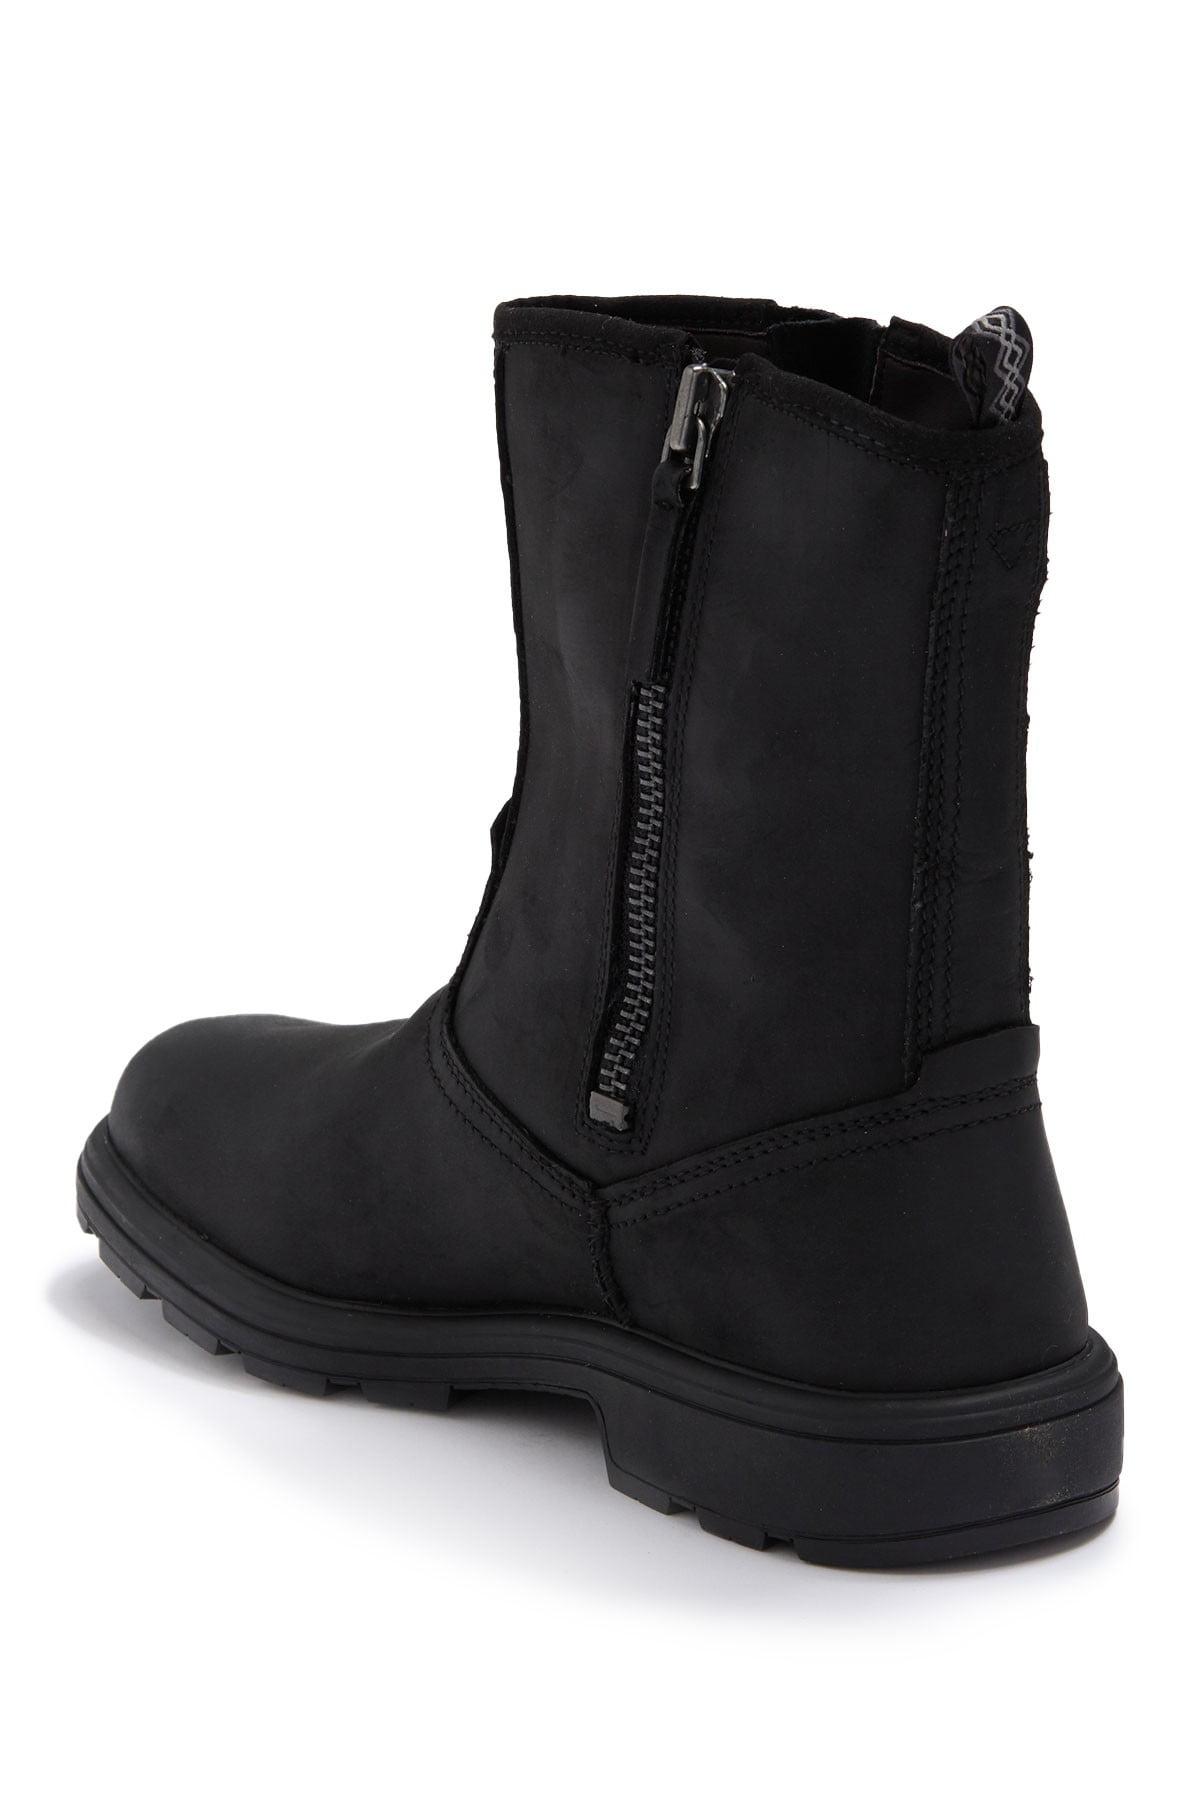 UGG Biltmore Moto Leather Boot in Black for Men - Lyst